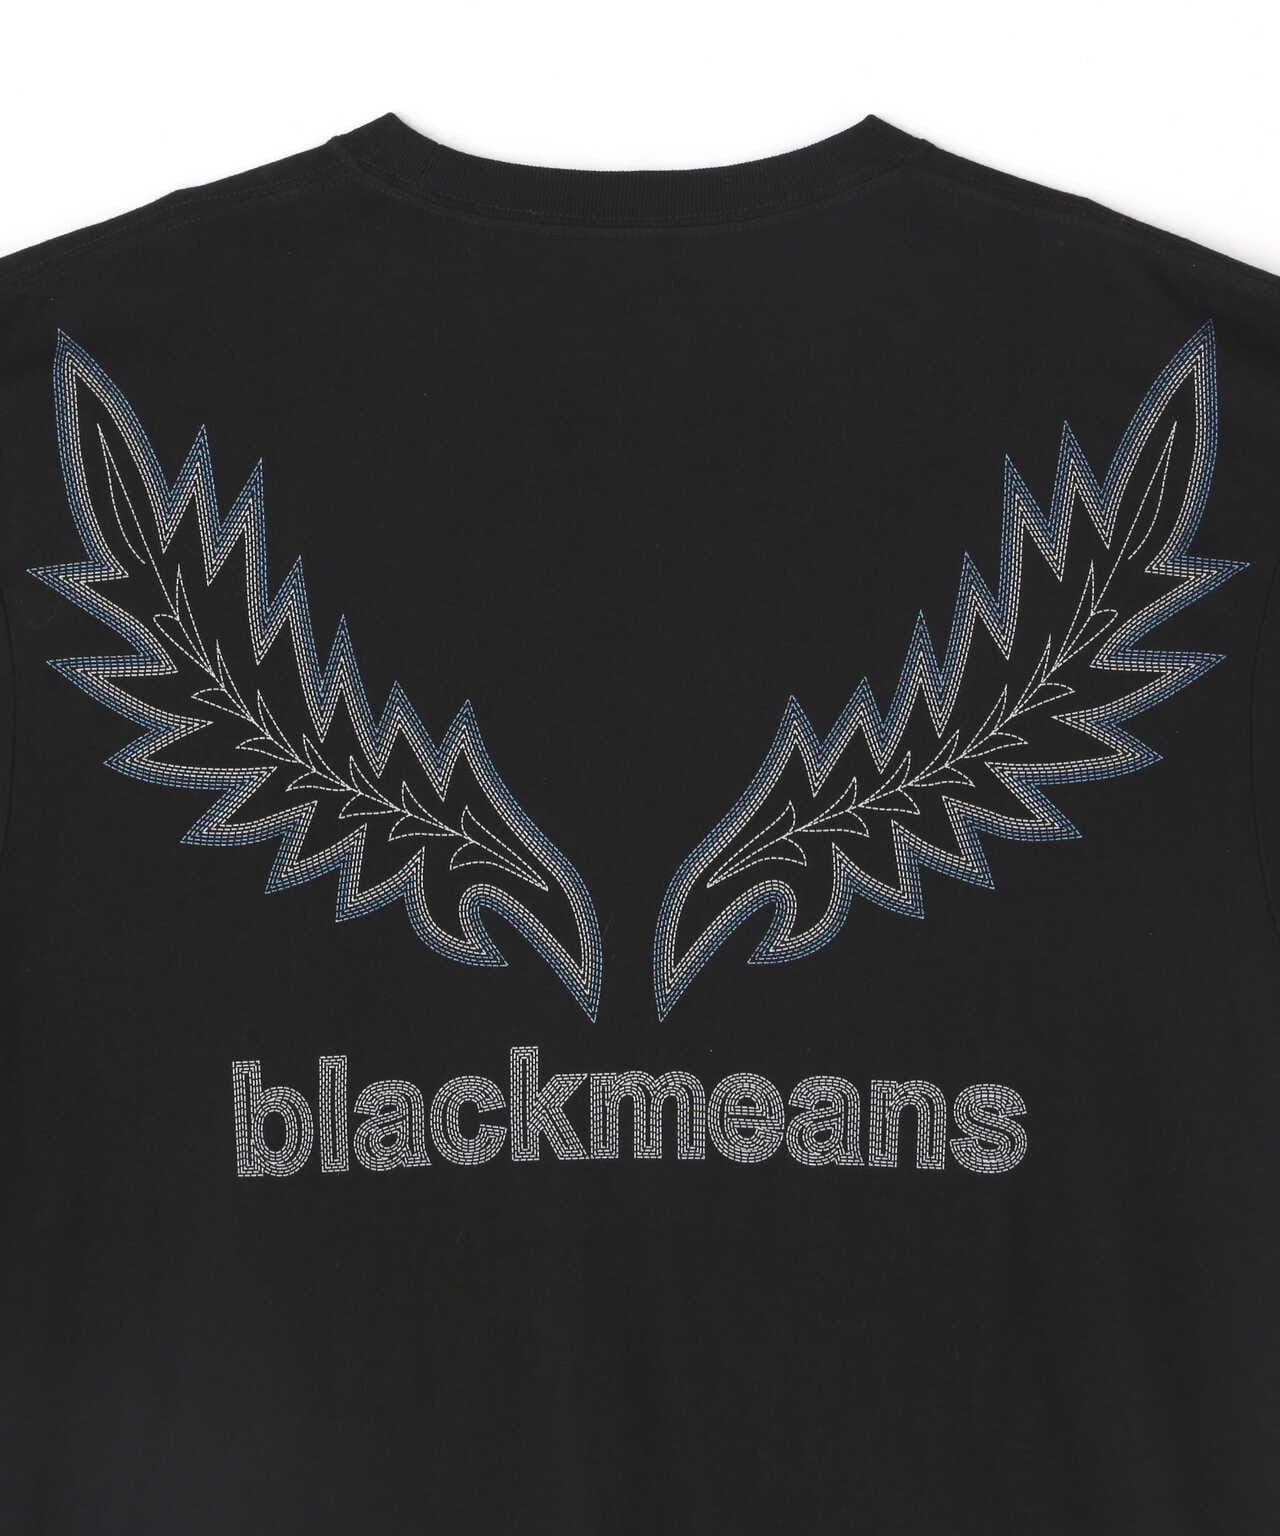 Blackmeans/ブラックミーンズ/WESTERN TEE WITH BANDANA/Tシャツ 